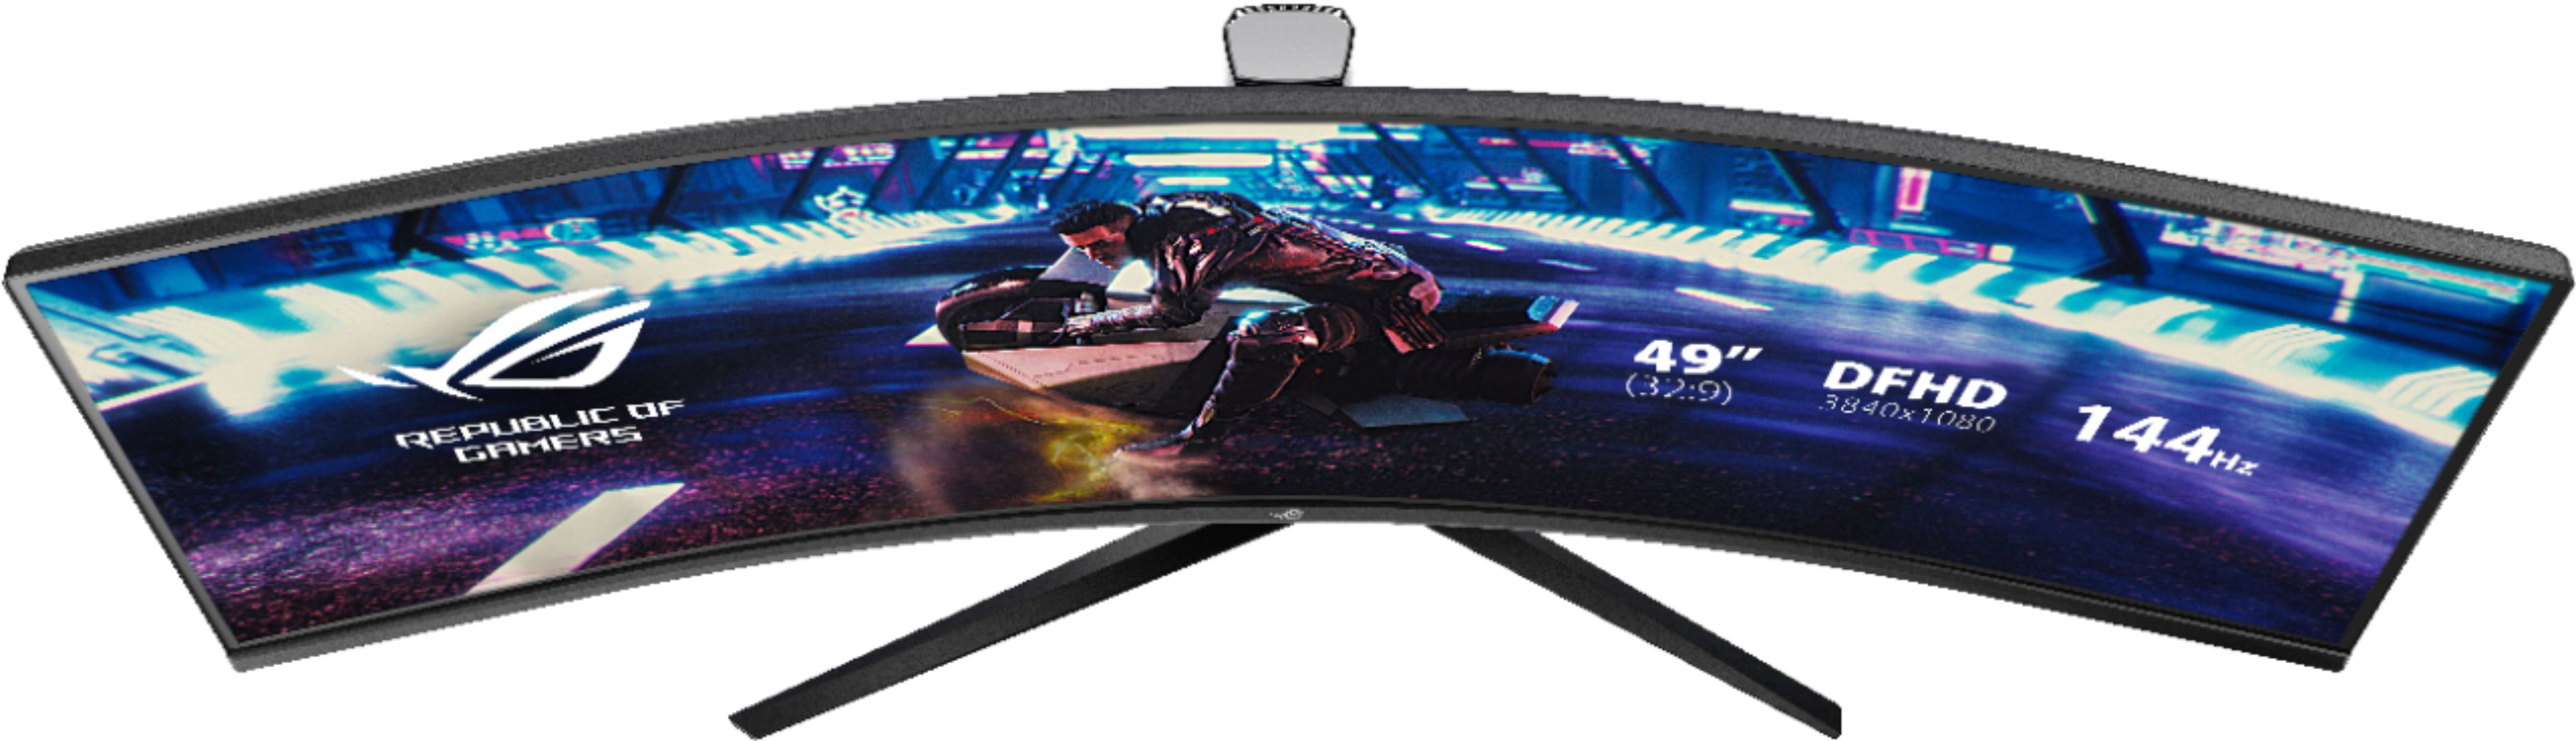 XG49VQ (DisplayPort,HDMI,USB) FHD Gaming Black HDR Buy: FreeSync 49” ASUS with 144Hz Strix ROG Monitor Best Curved